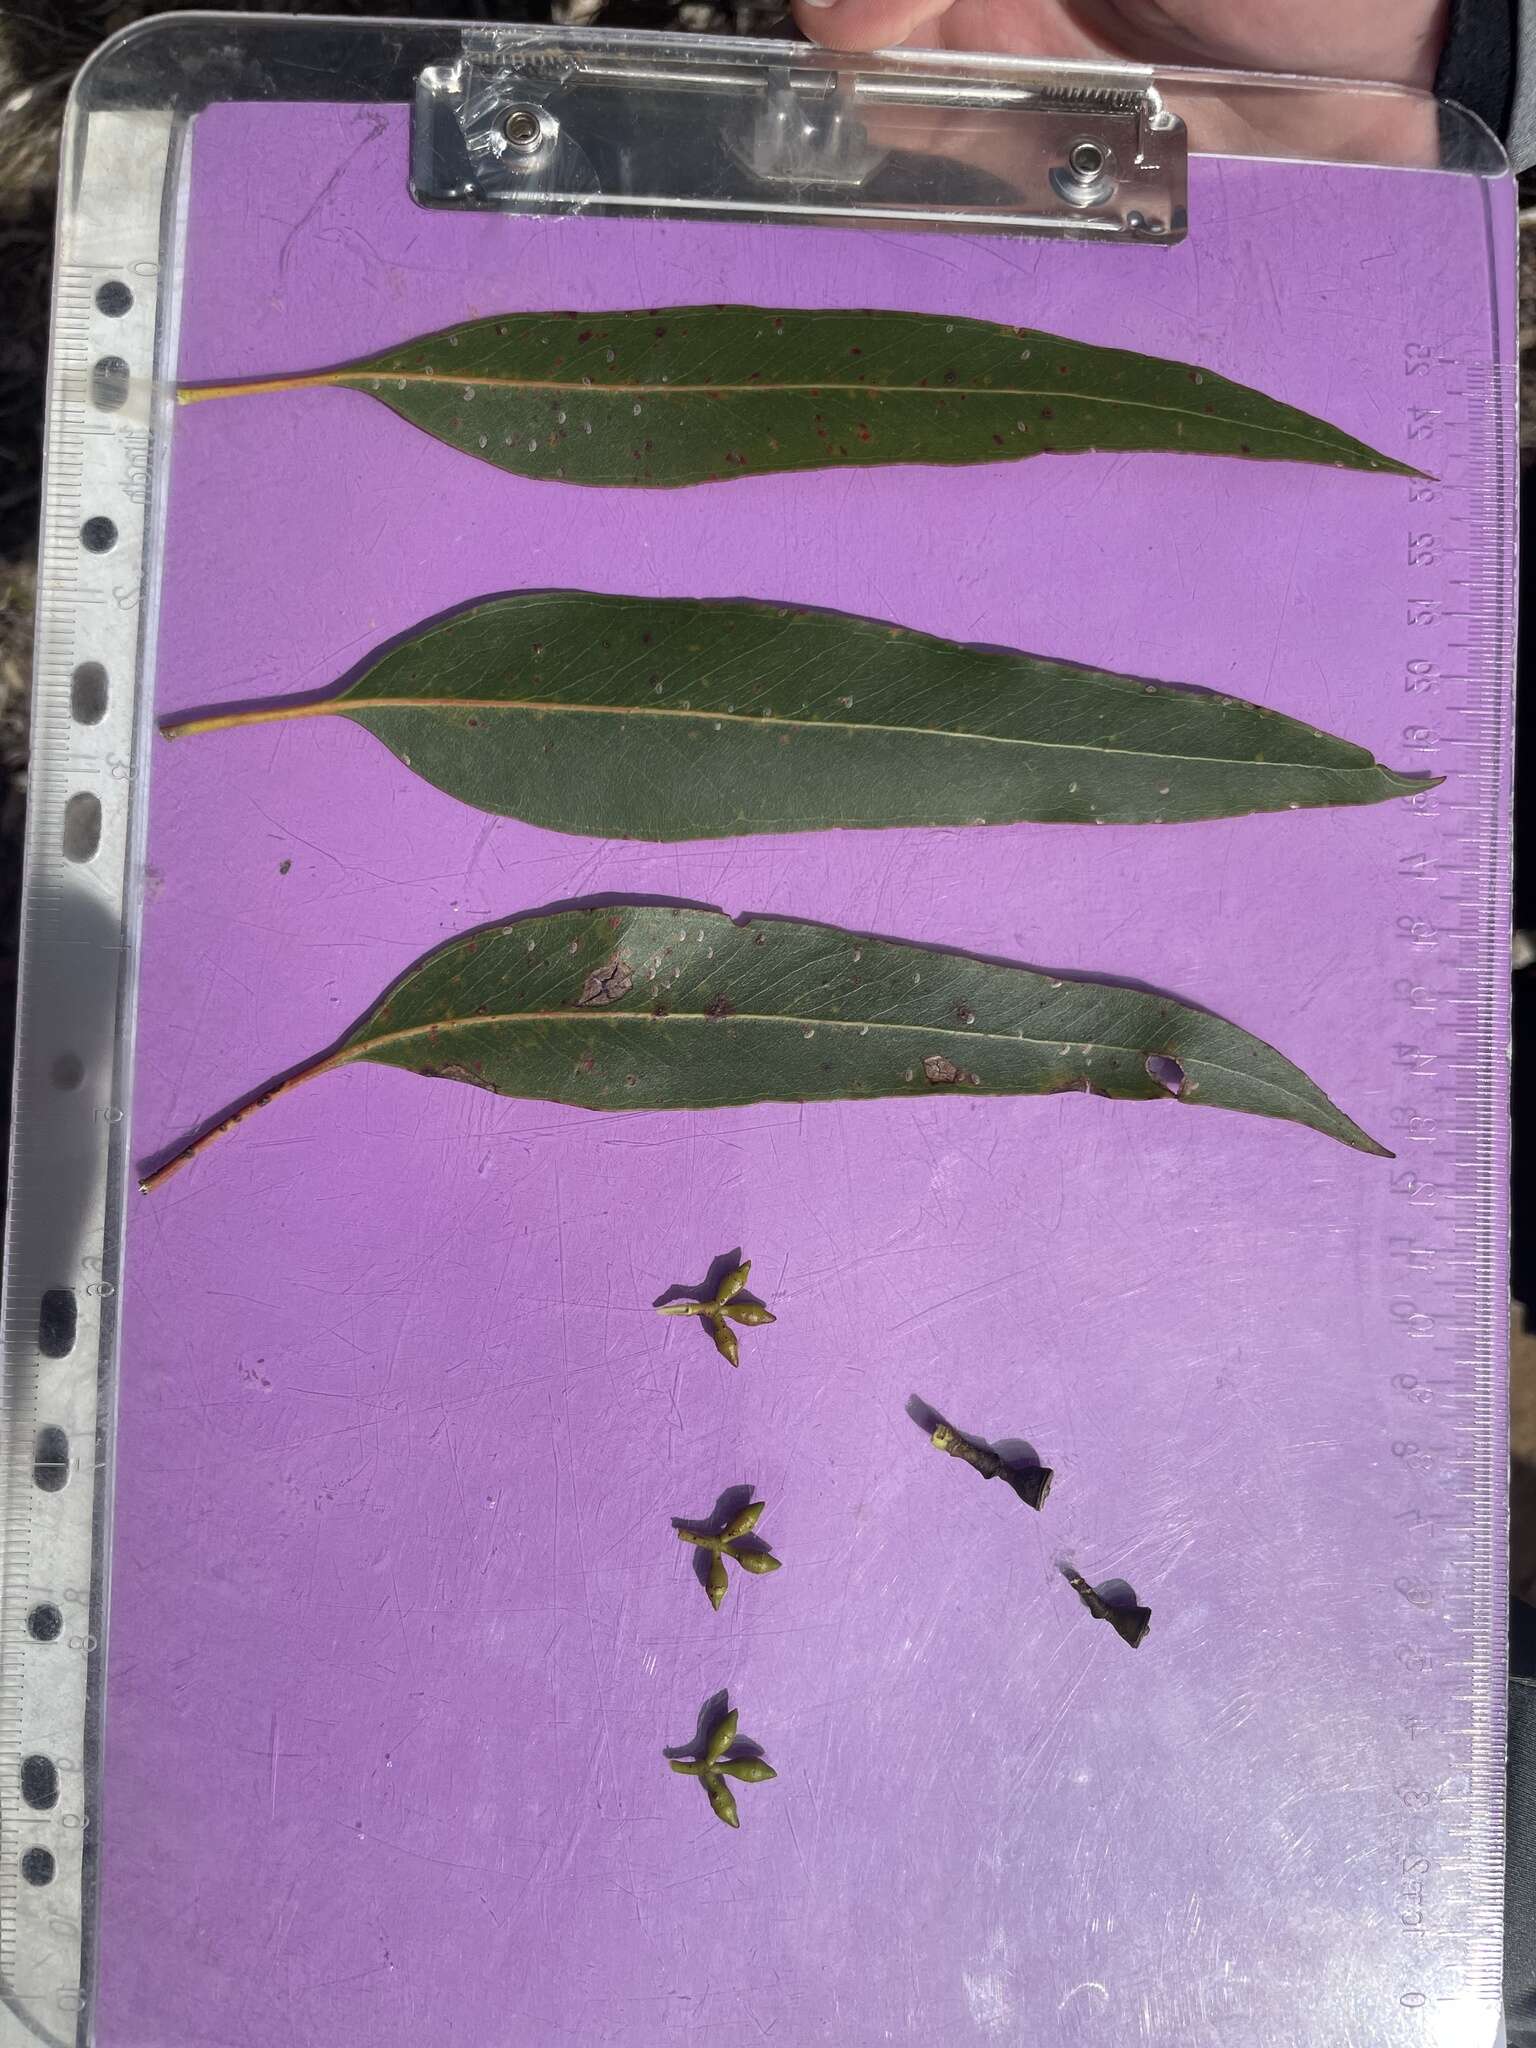 Image of Eucalyptus dalrympleana subsp. dalrympleana